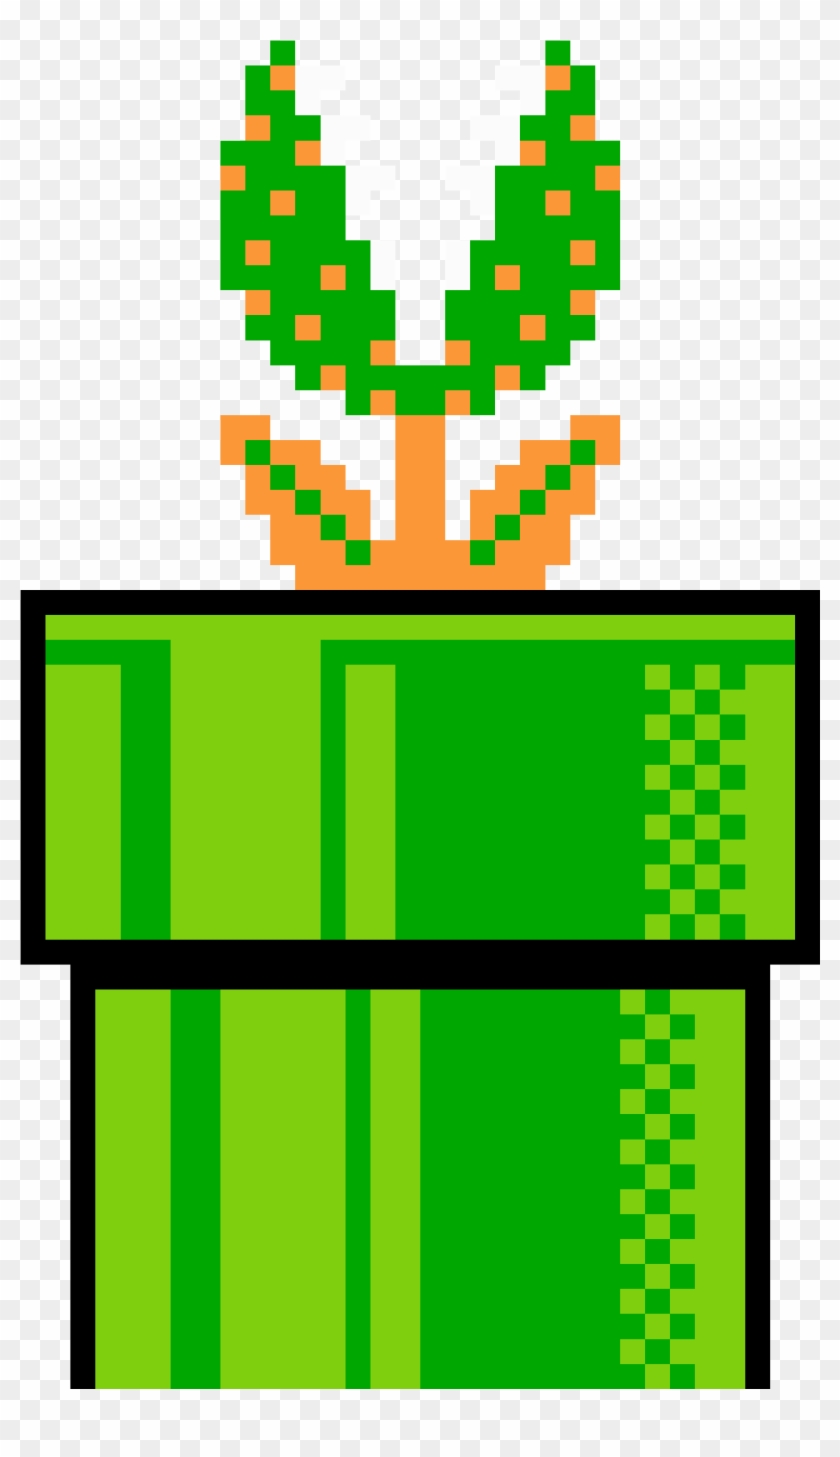 Марио растение 8 бит